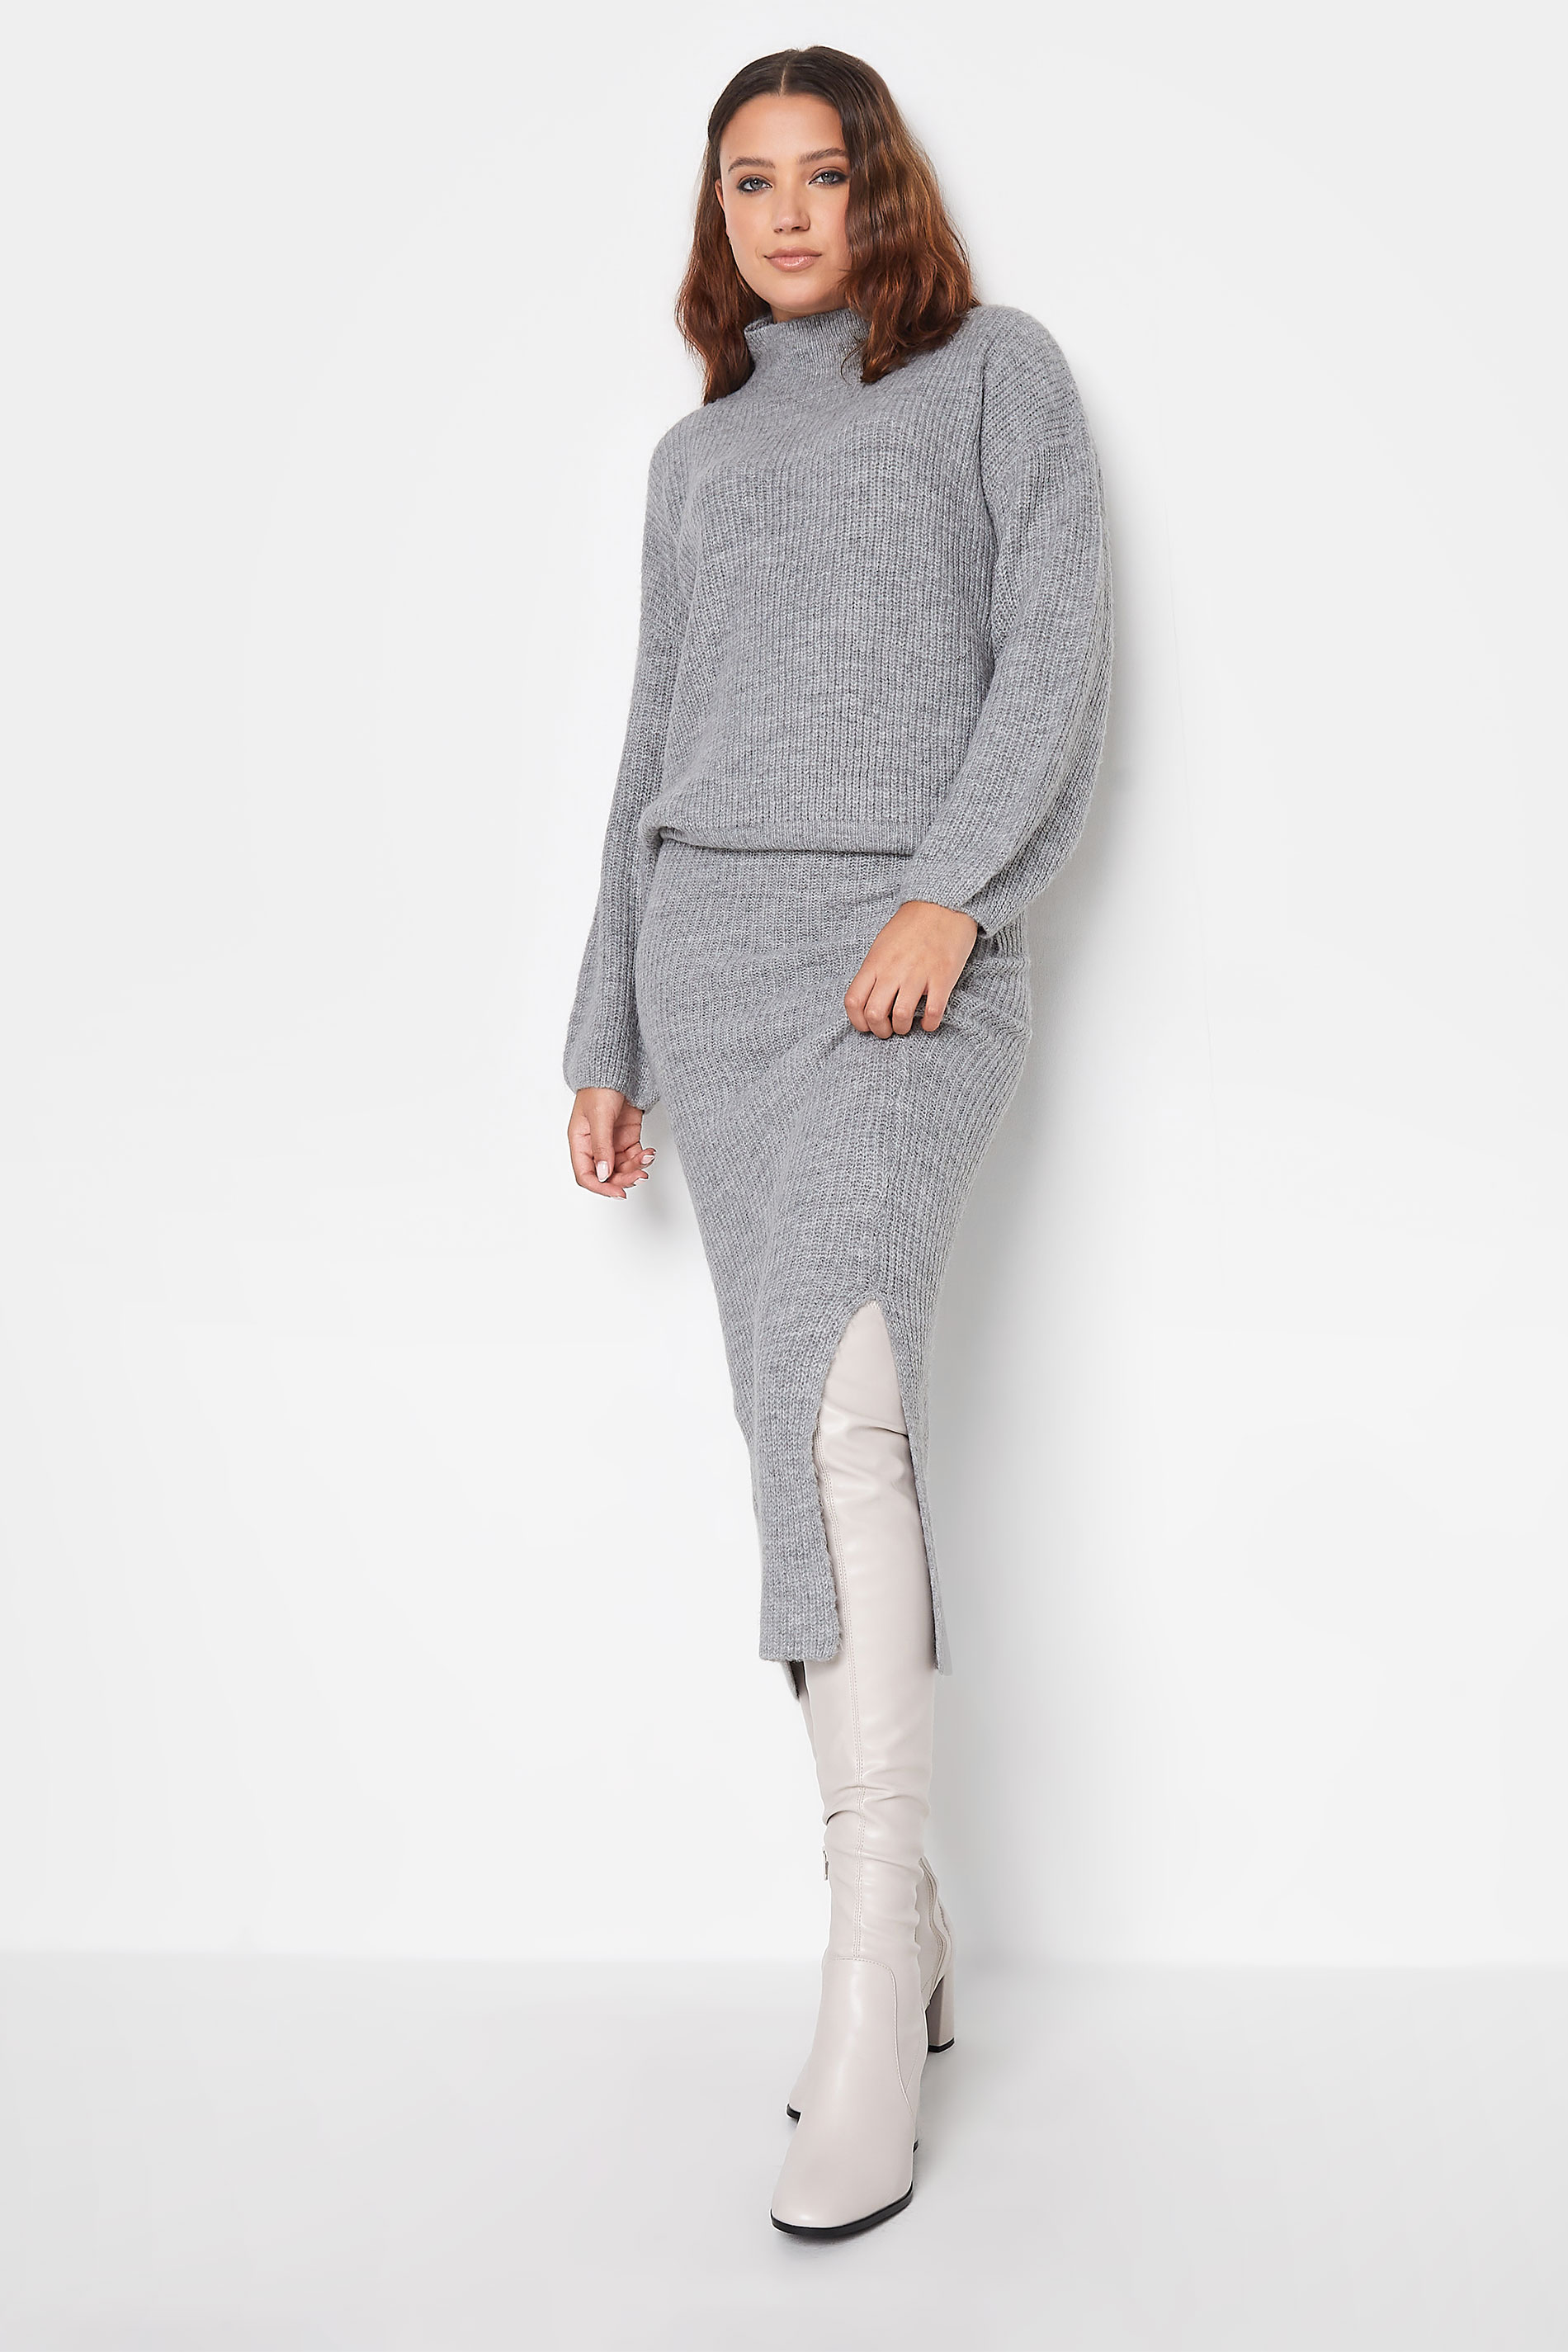 LTS Tall Grey Midi Knitted Skirt | Long Tall Sally 3